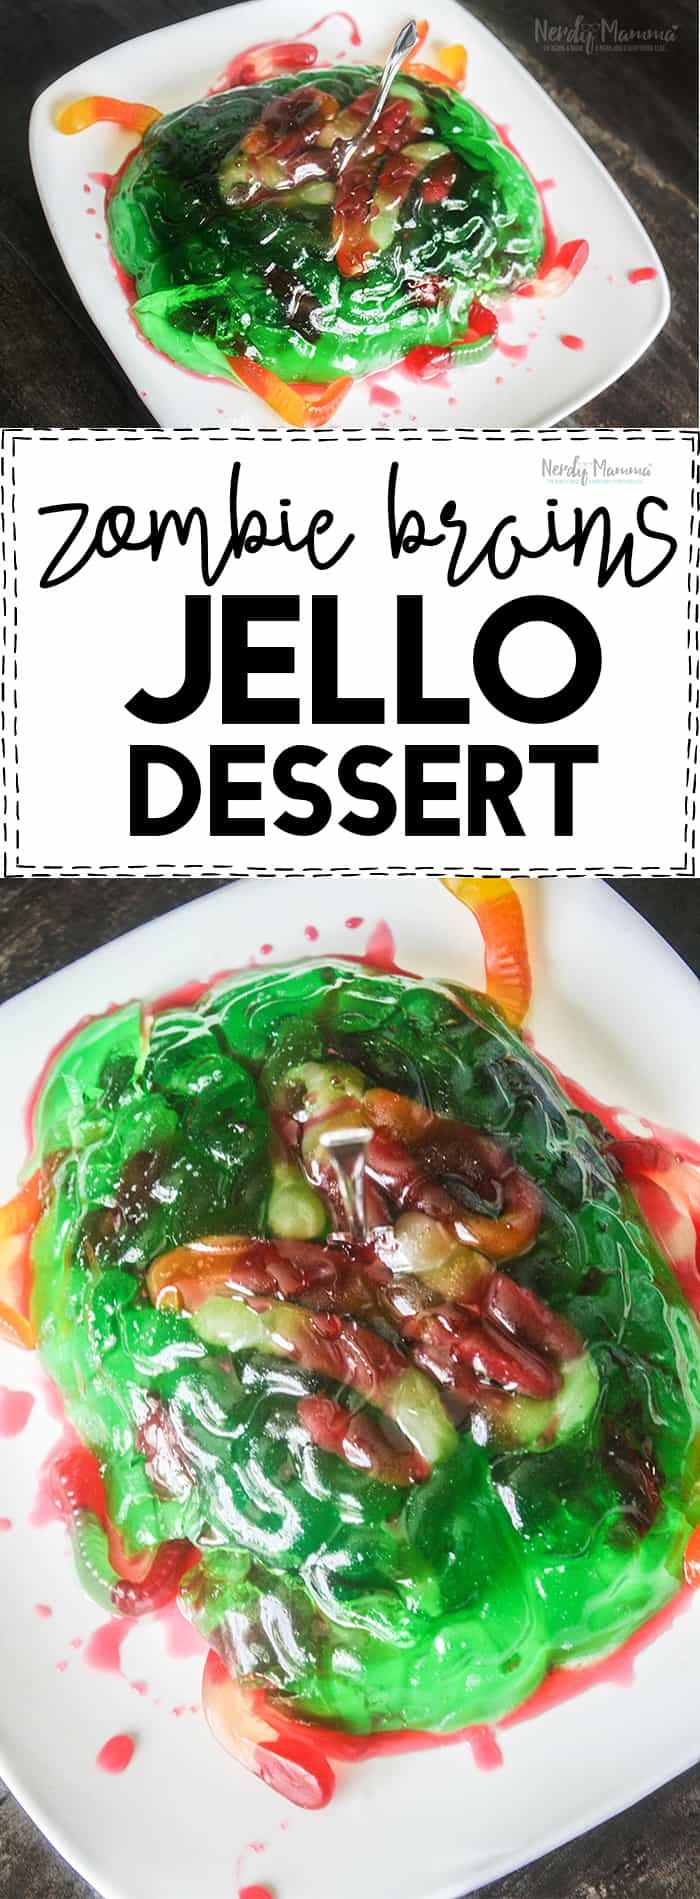 Calling all Jello fans! I've got the perfect Halloween treat for you: zombie brain jello dessert. It's a super fun treat for the Halloween season.